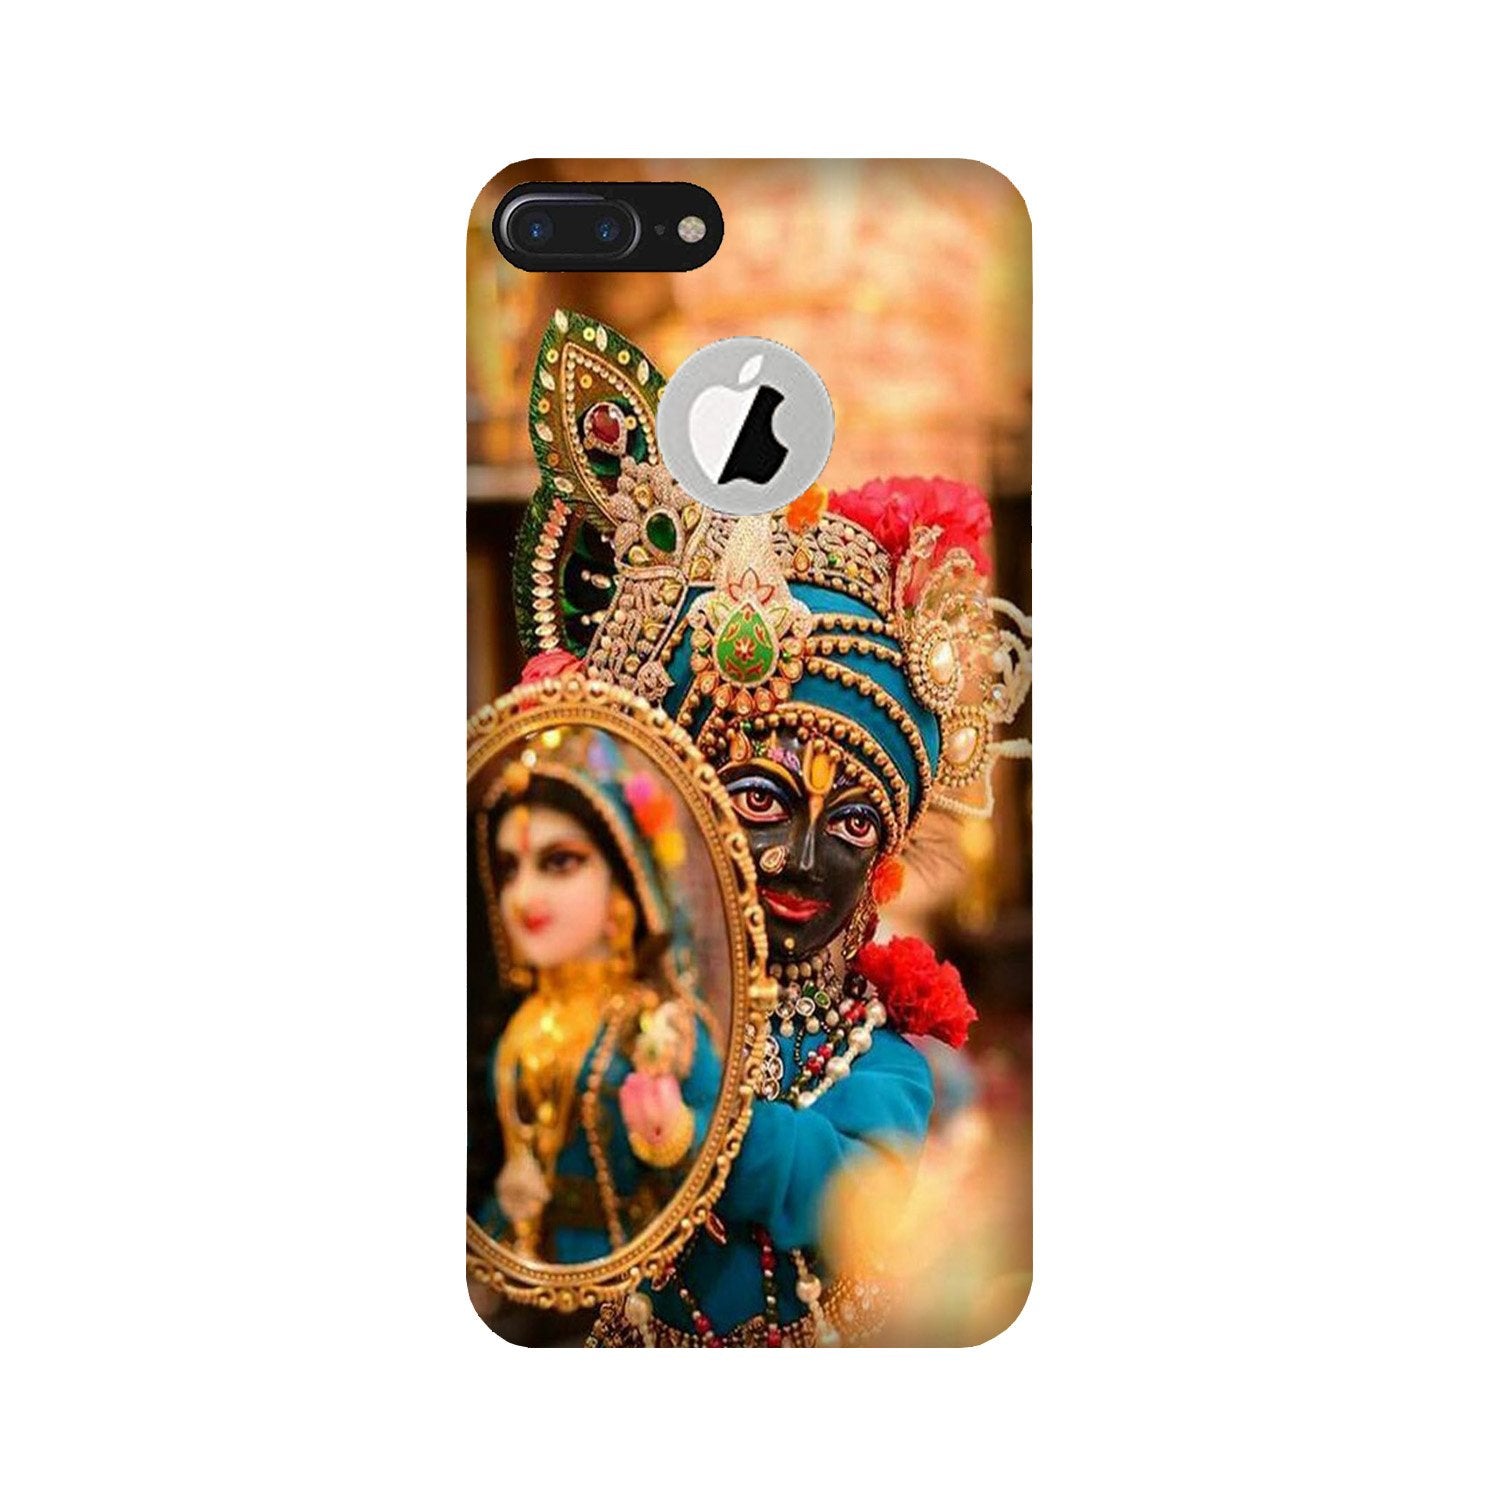 Lord Krishna5 Case for iPhone 7 Plus logo cut